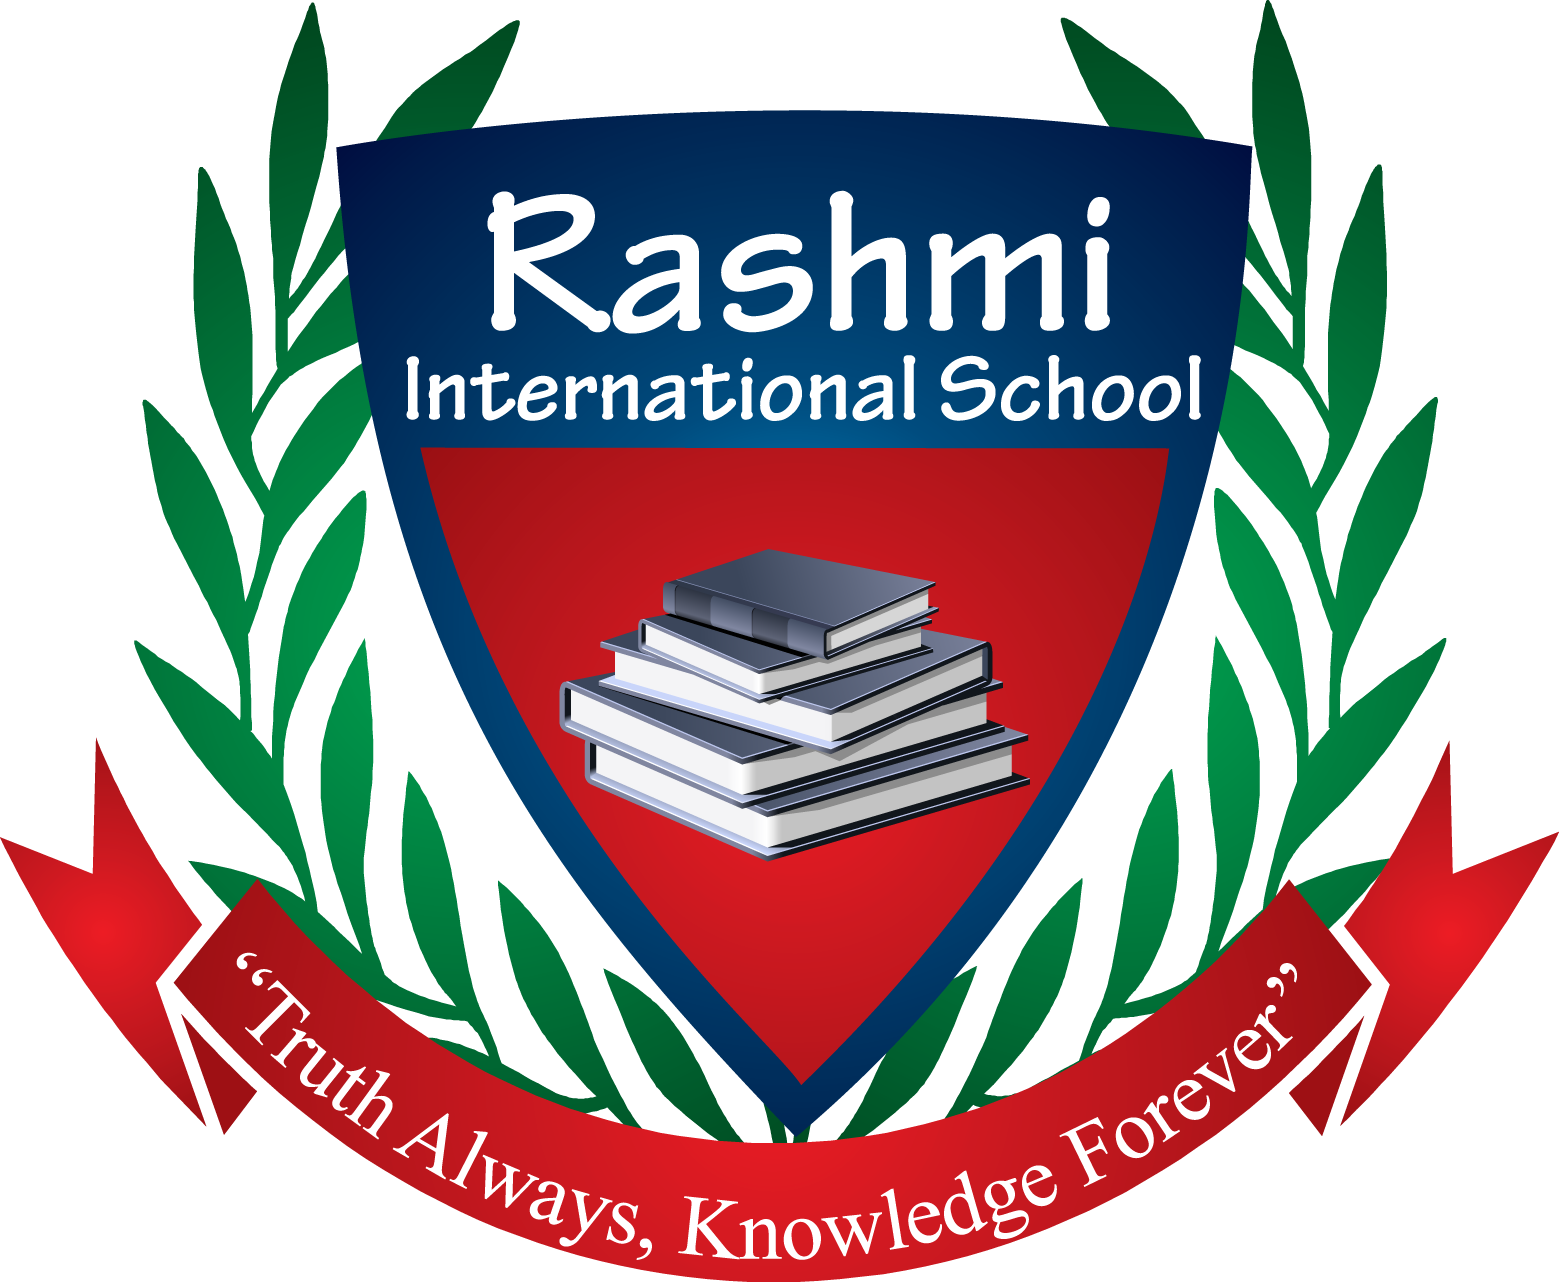 Rashmi International School